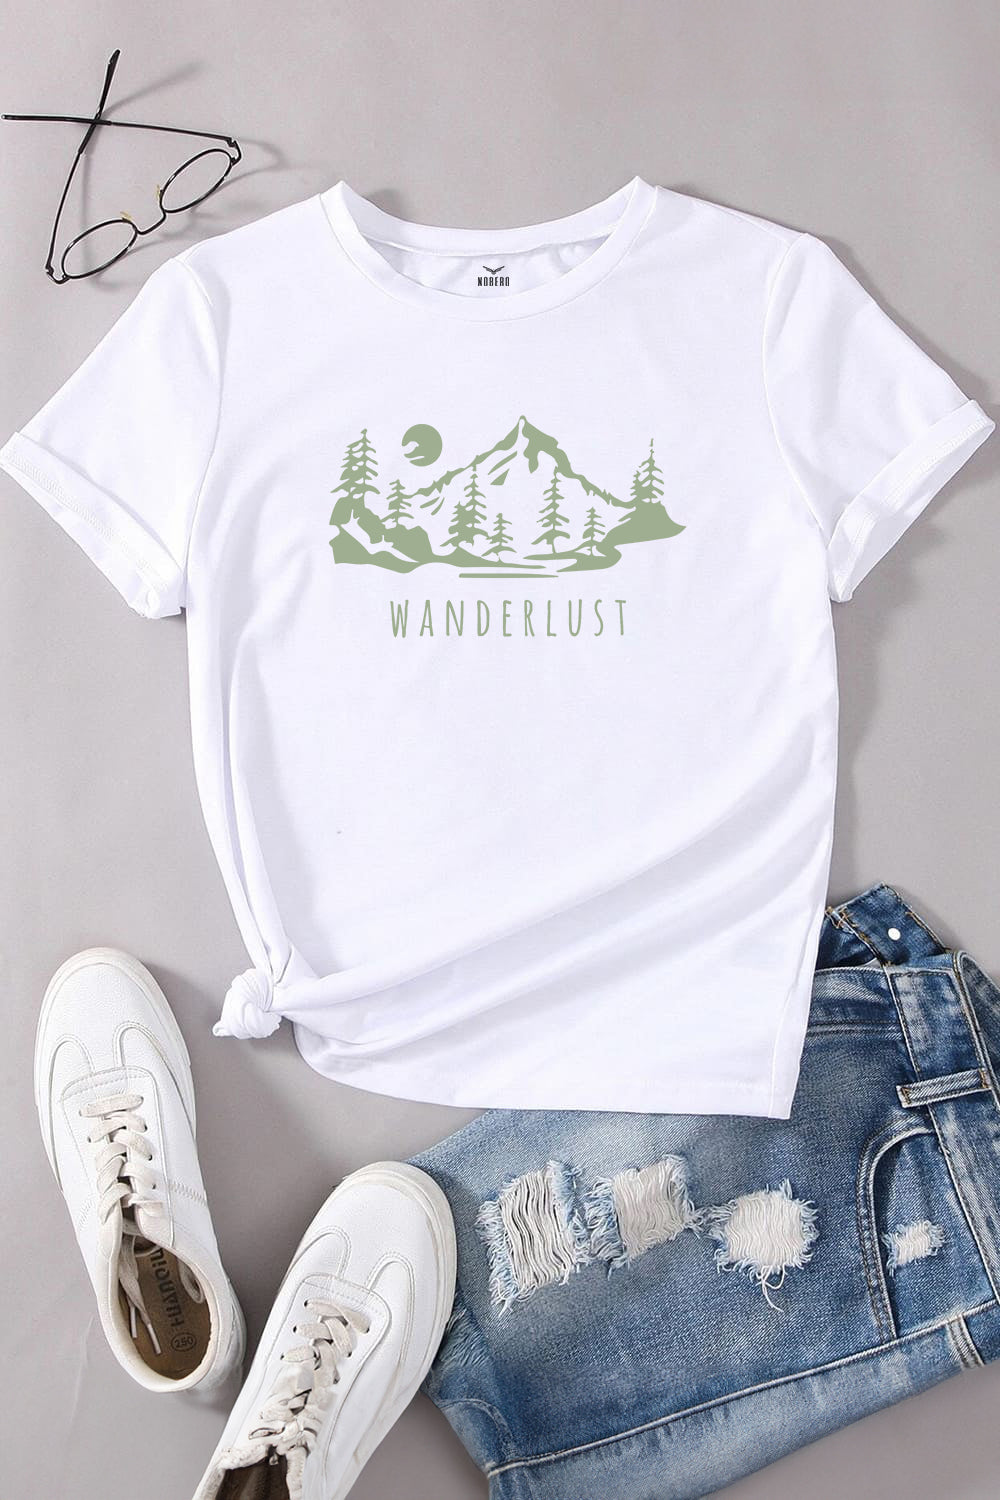 Boyfriend Wanderlust V2 Classic Fit T-Shirt